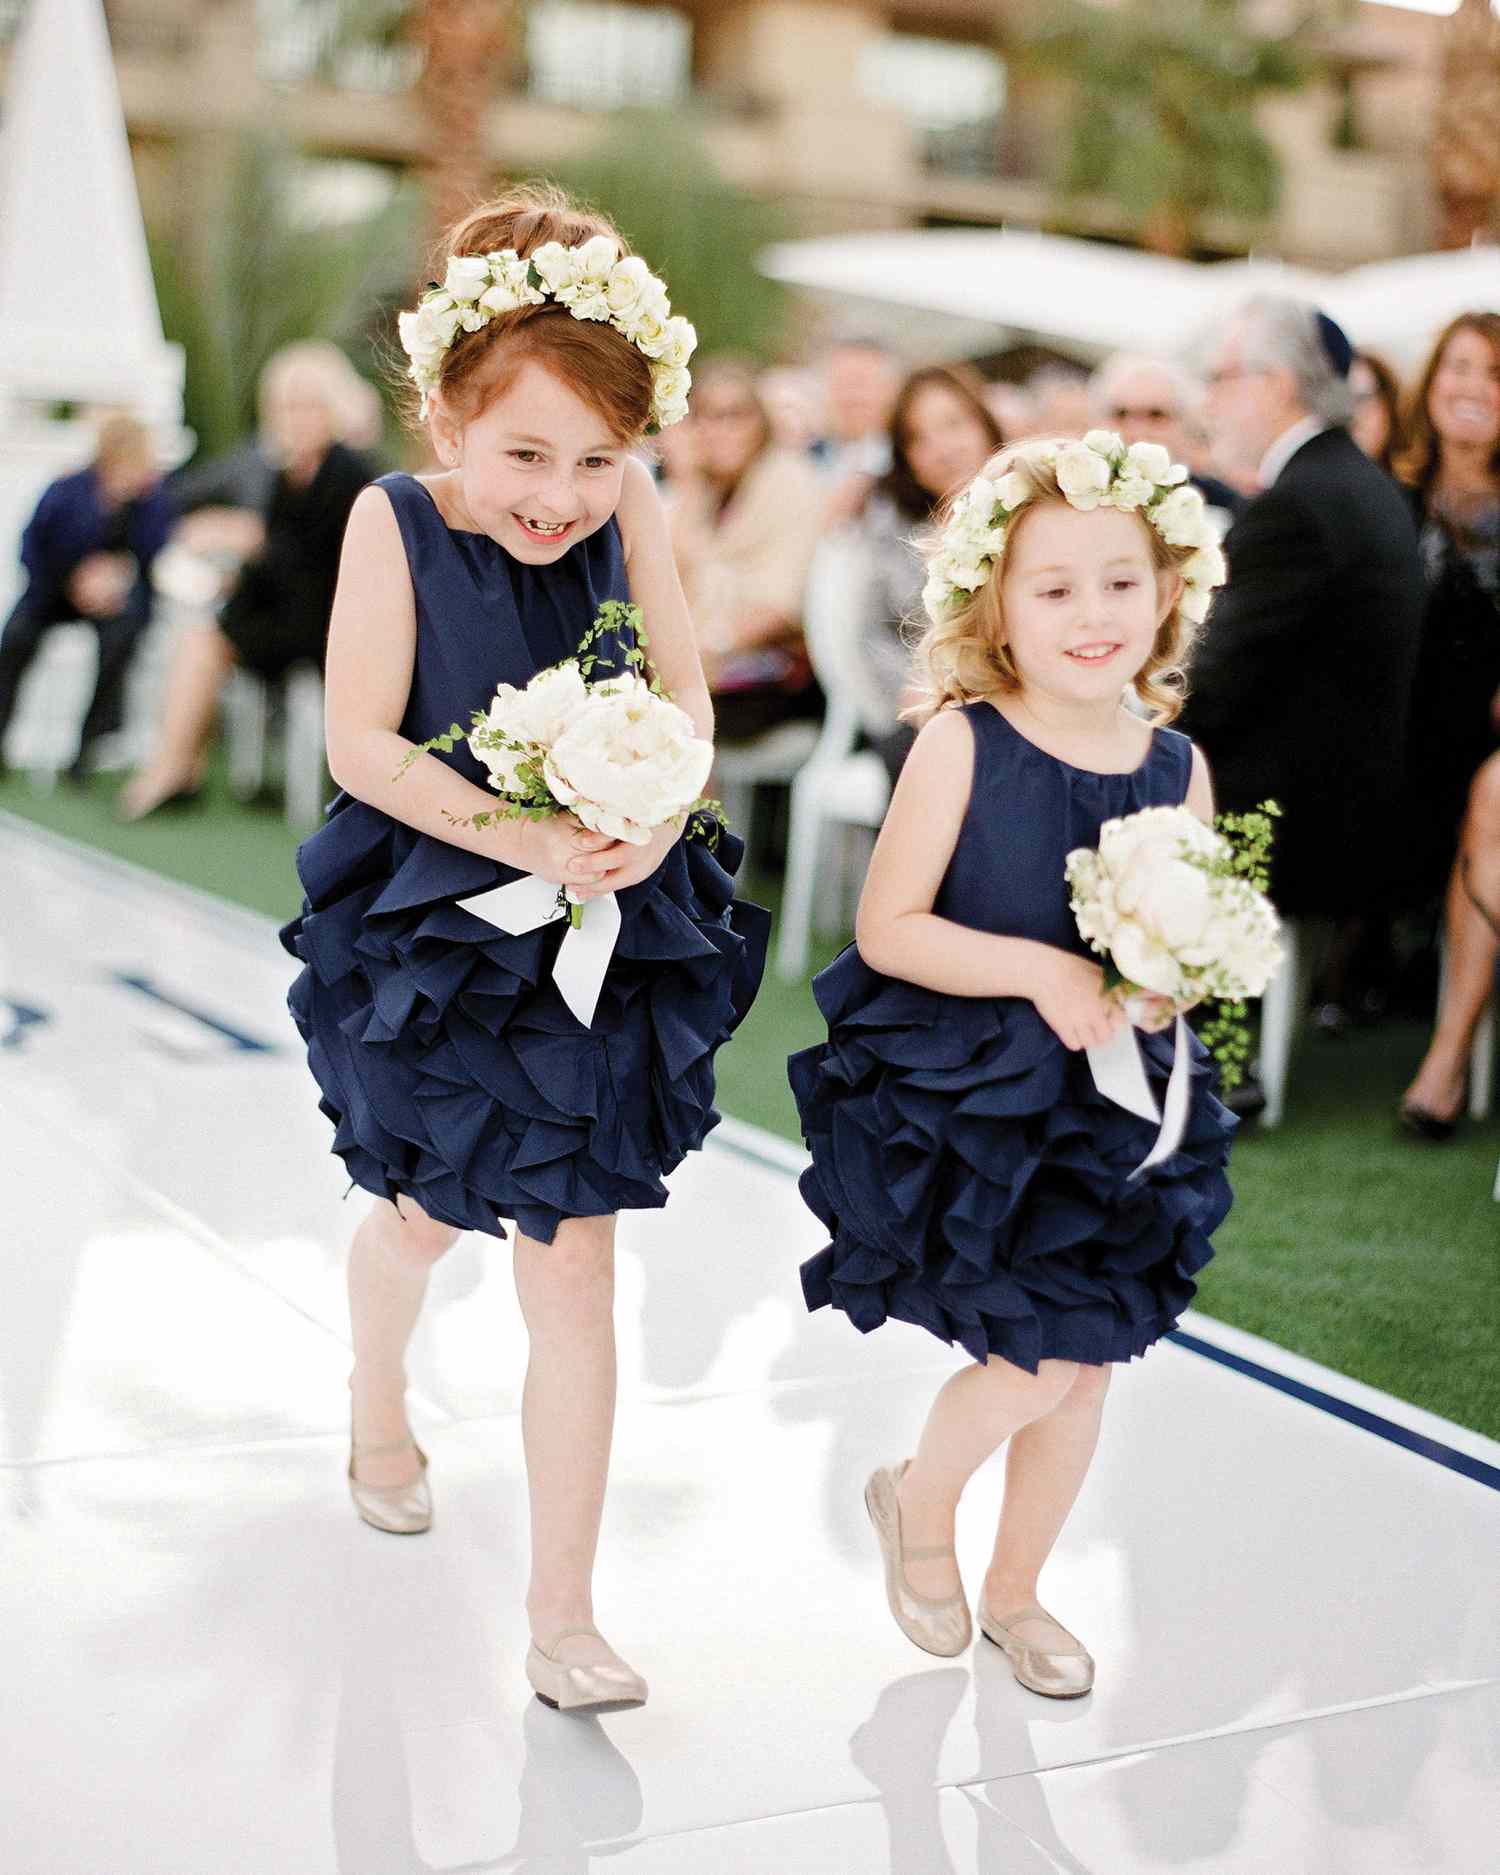 tali-mike-real-wedding-flower-girls-walking-down-aisle.jpg